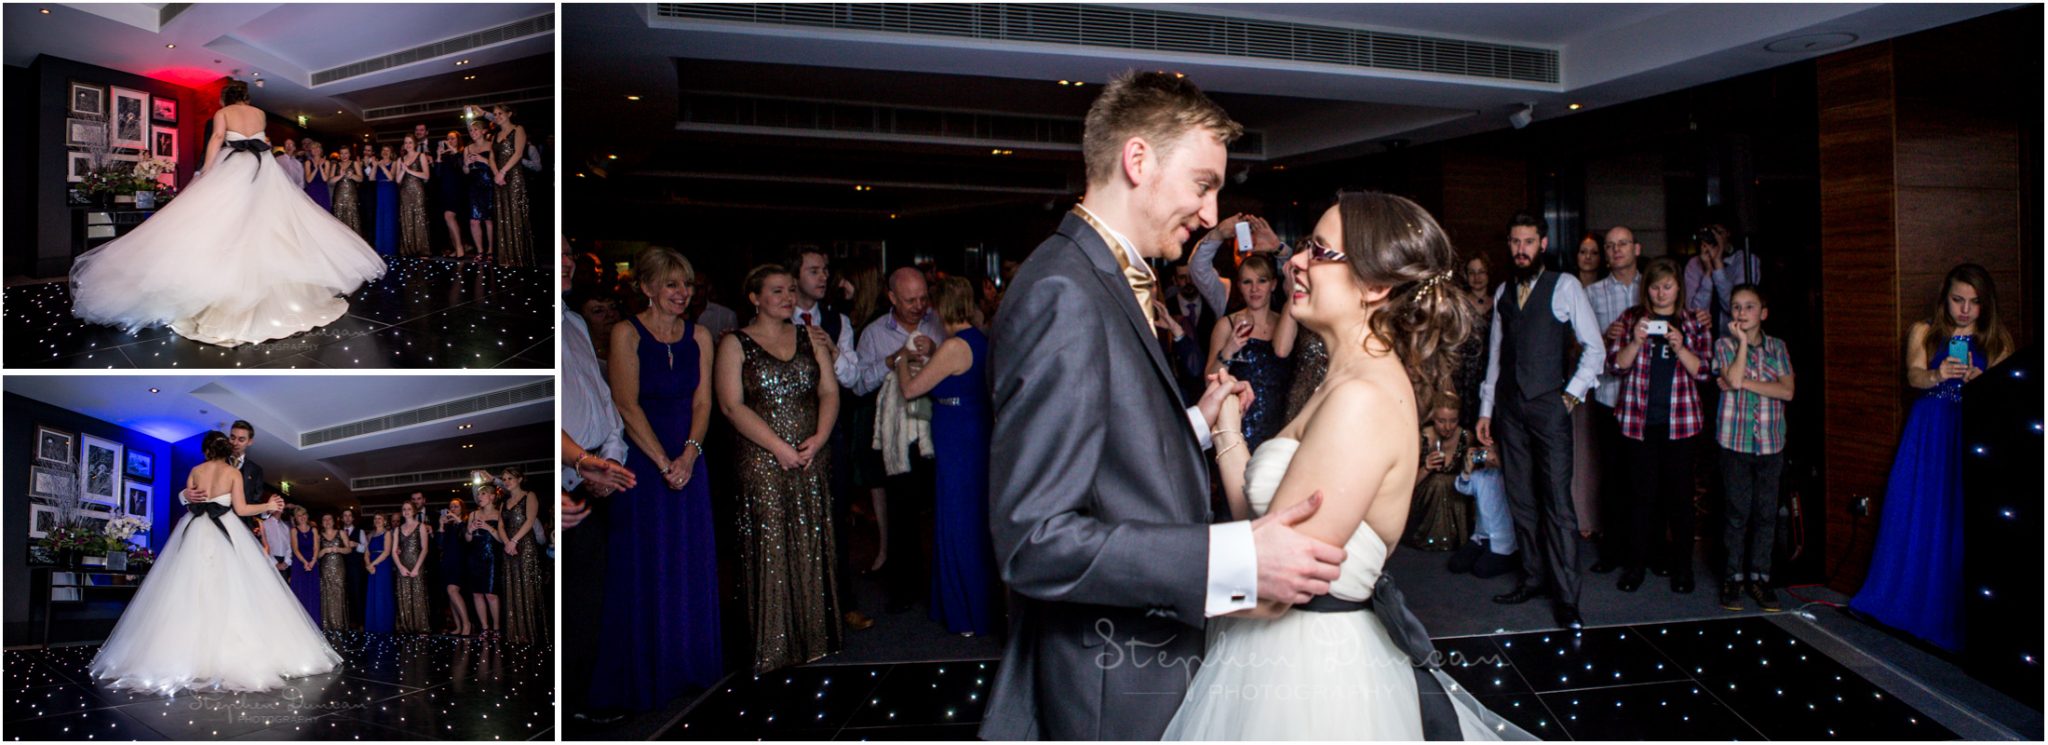 The Aviator wedding photography first dance